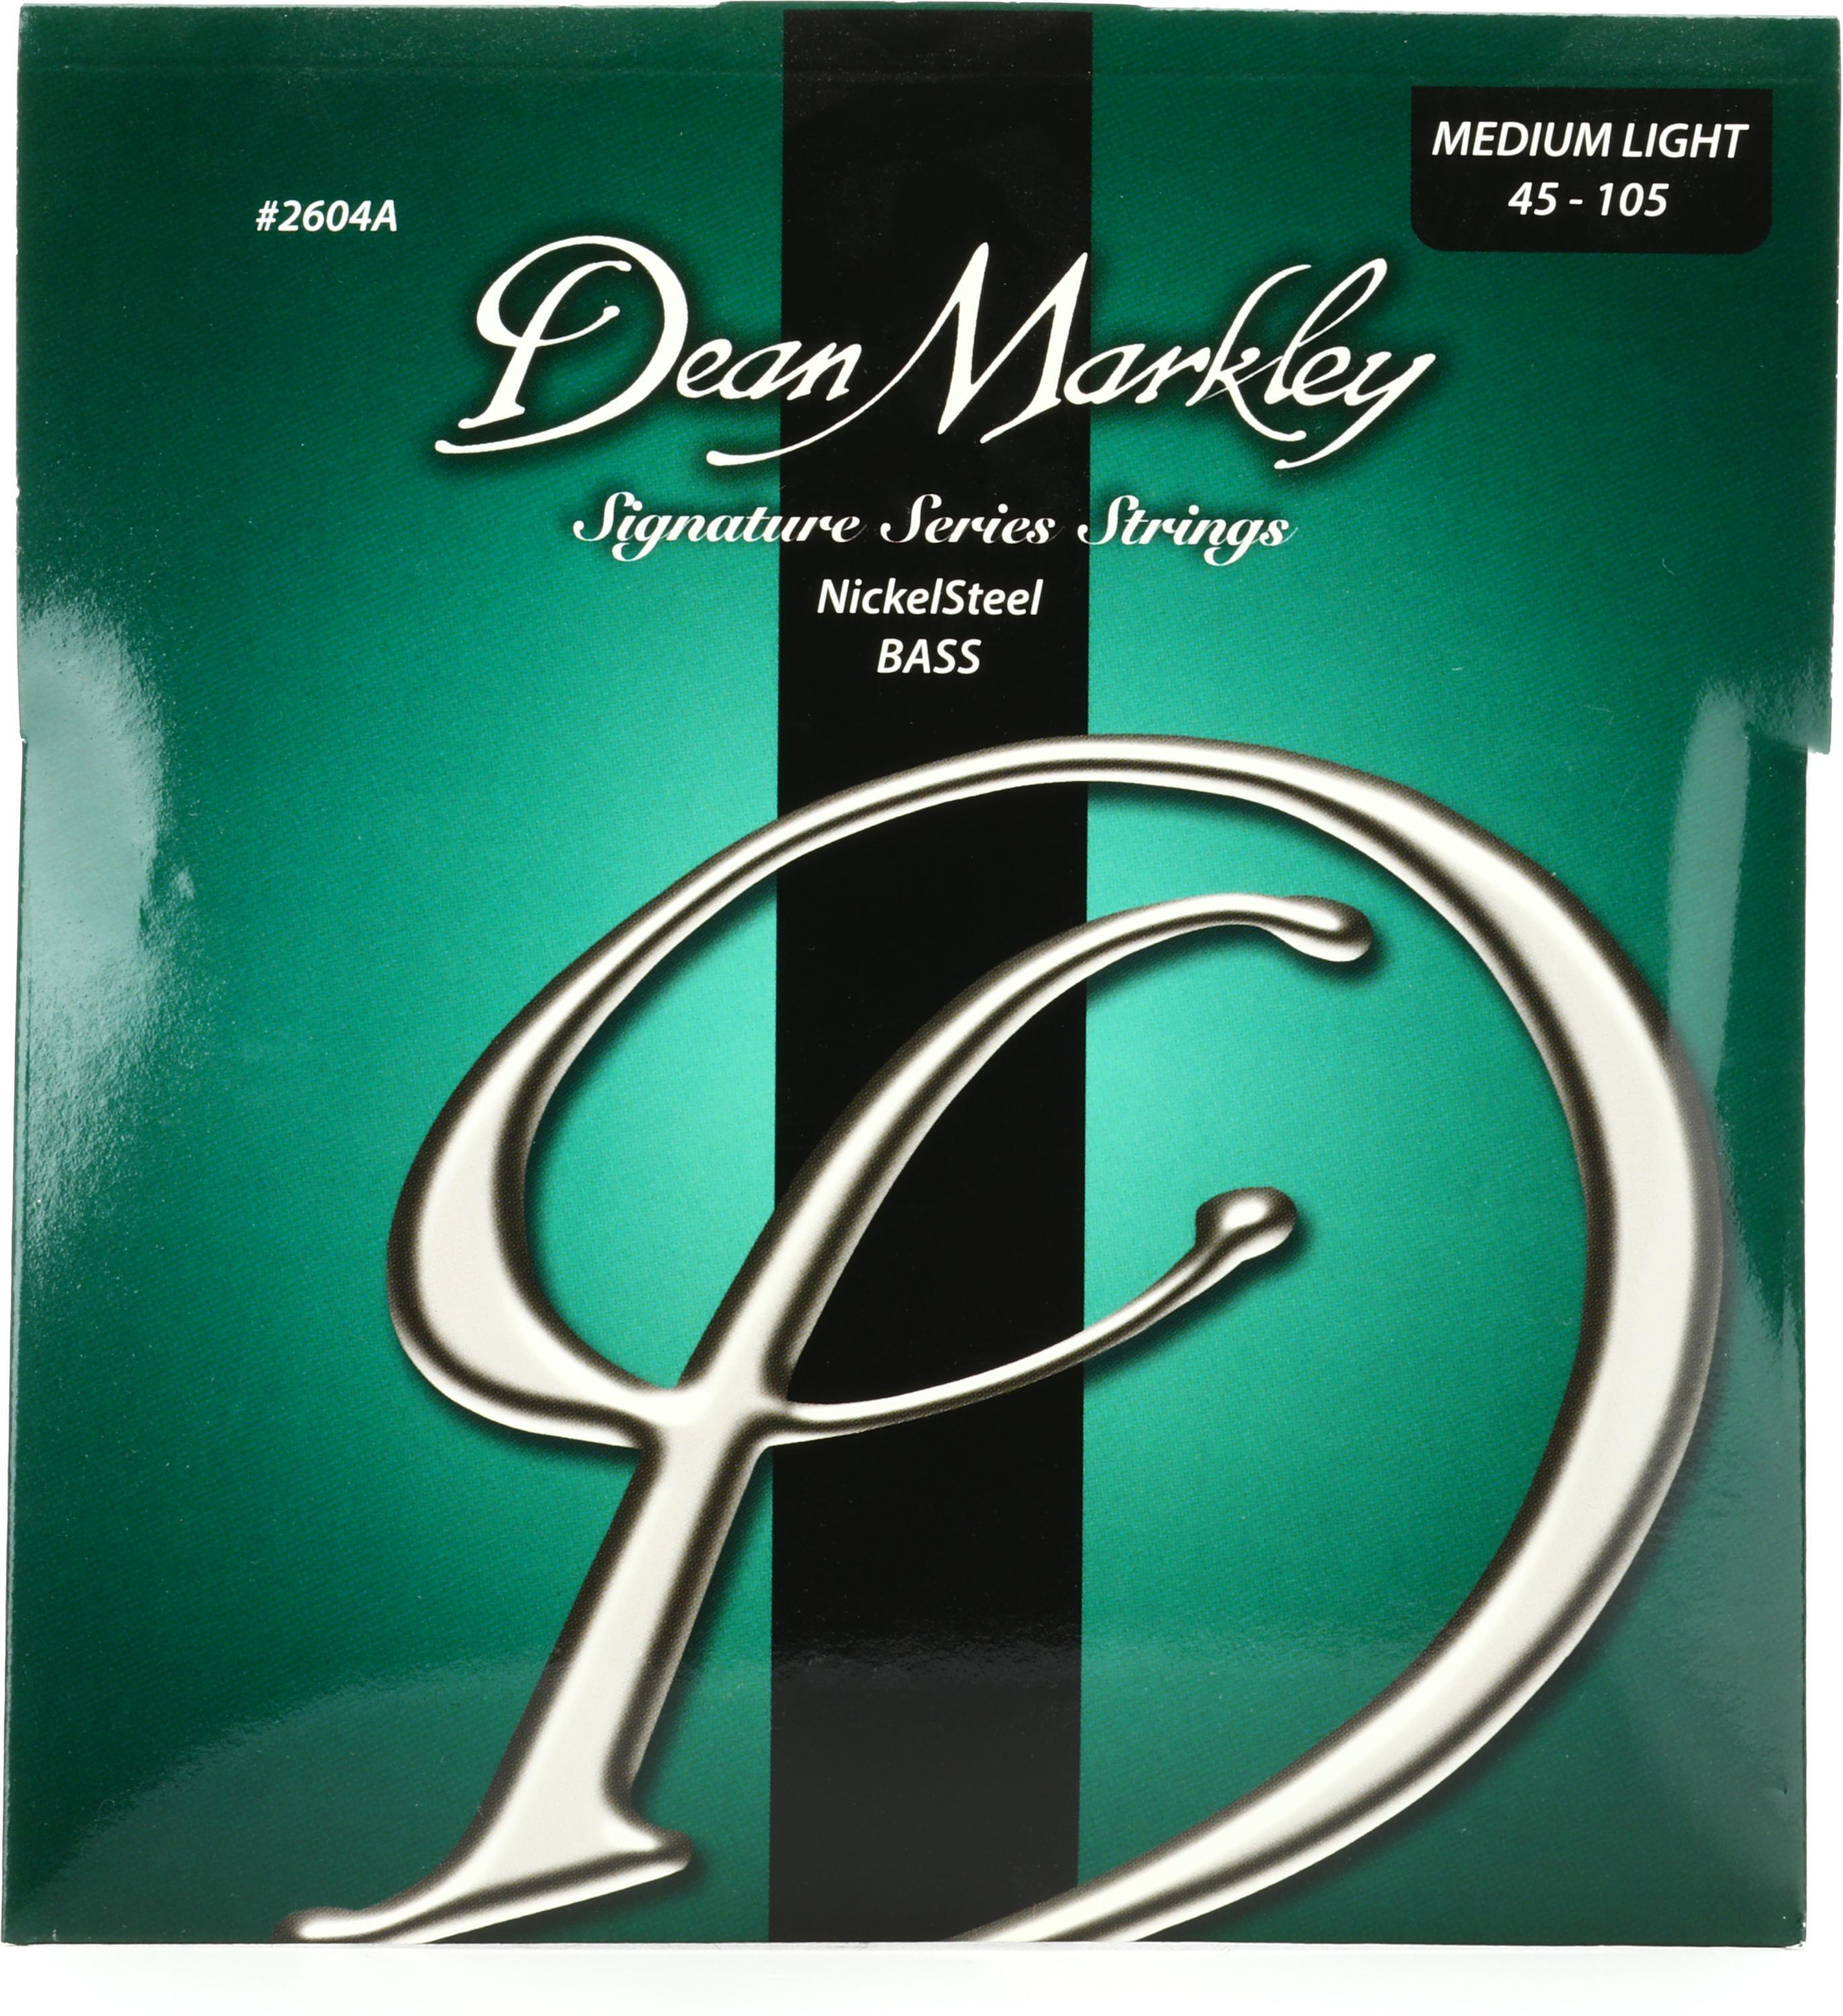 Bundled Item: Dean Markley 2604A Nickel Steel Bass Guitar Strings - .045-.105 Medium Light